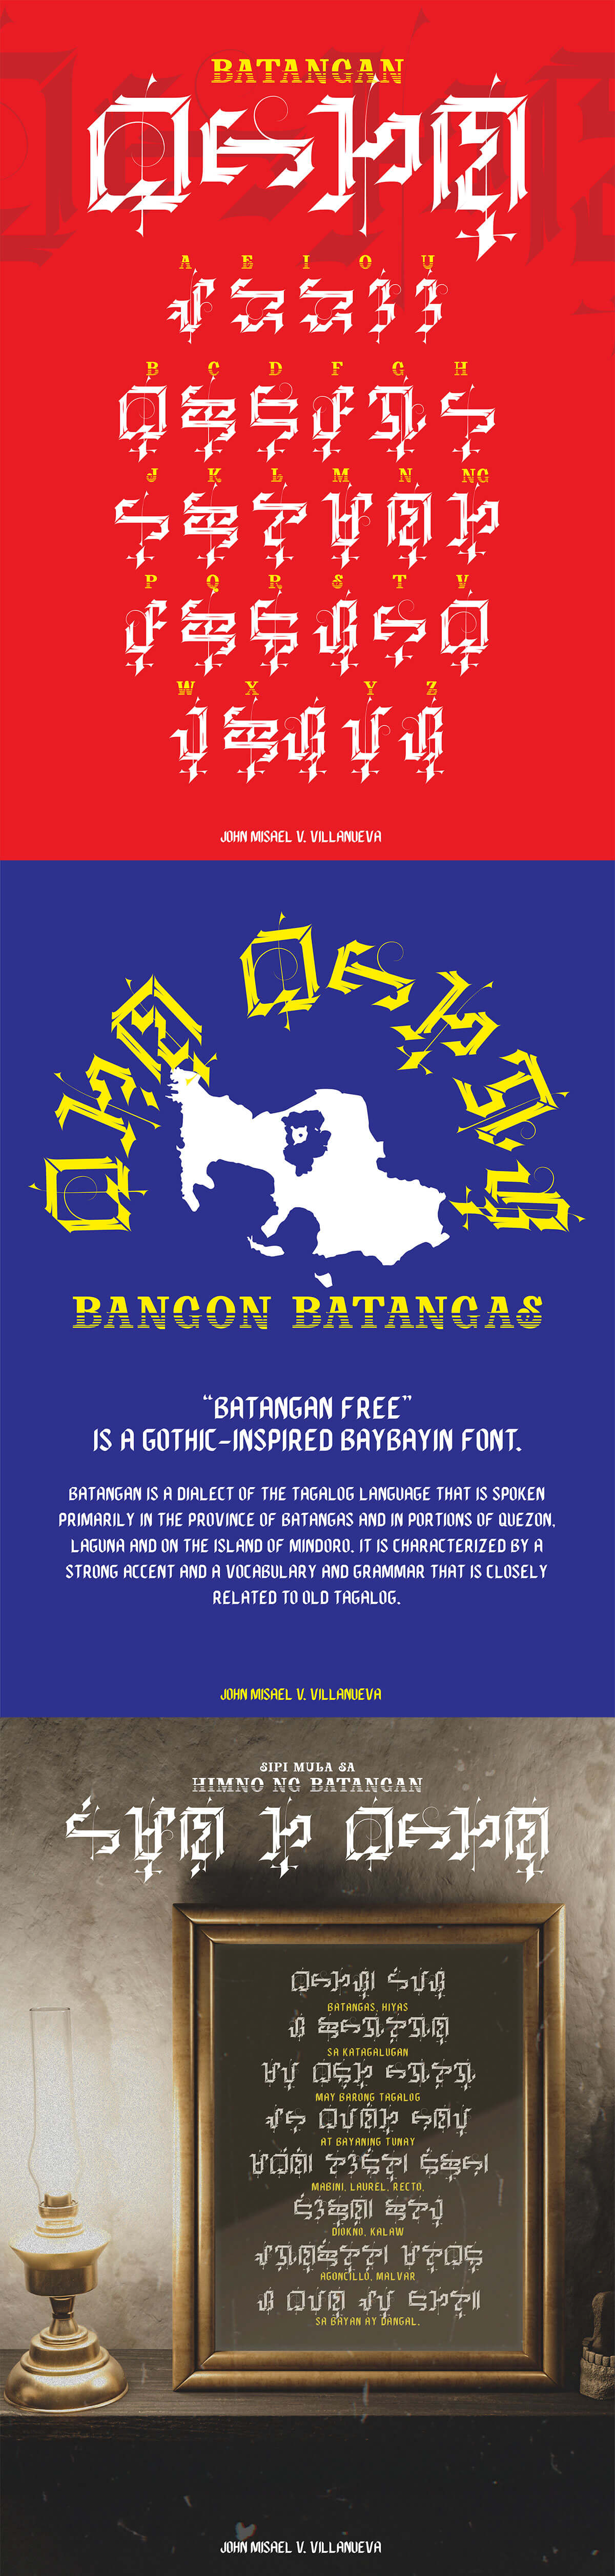 Free BBT Batangan Art Deco Font